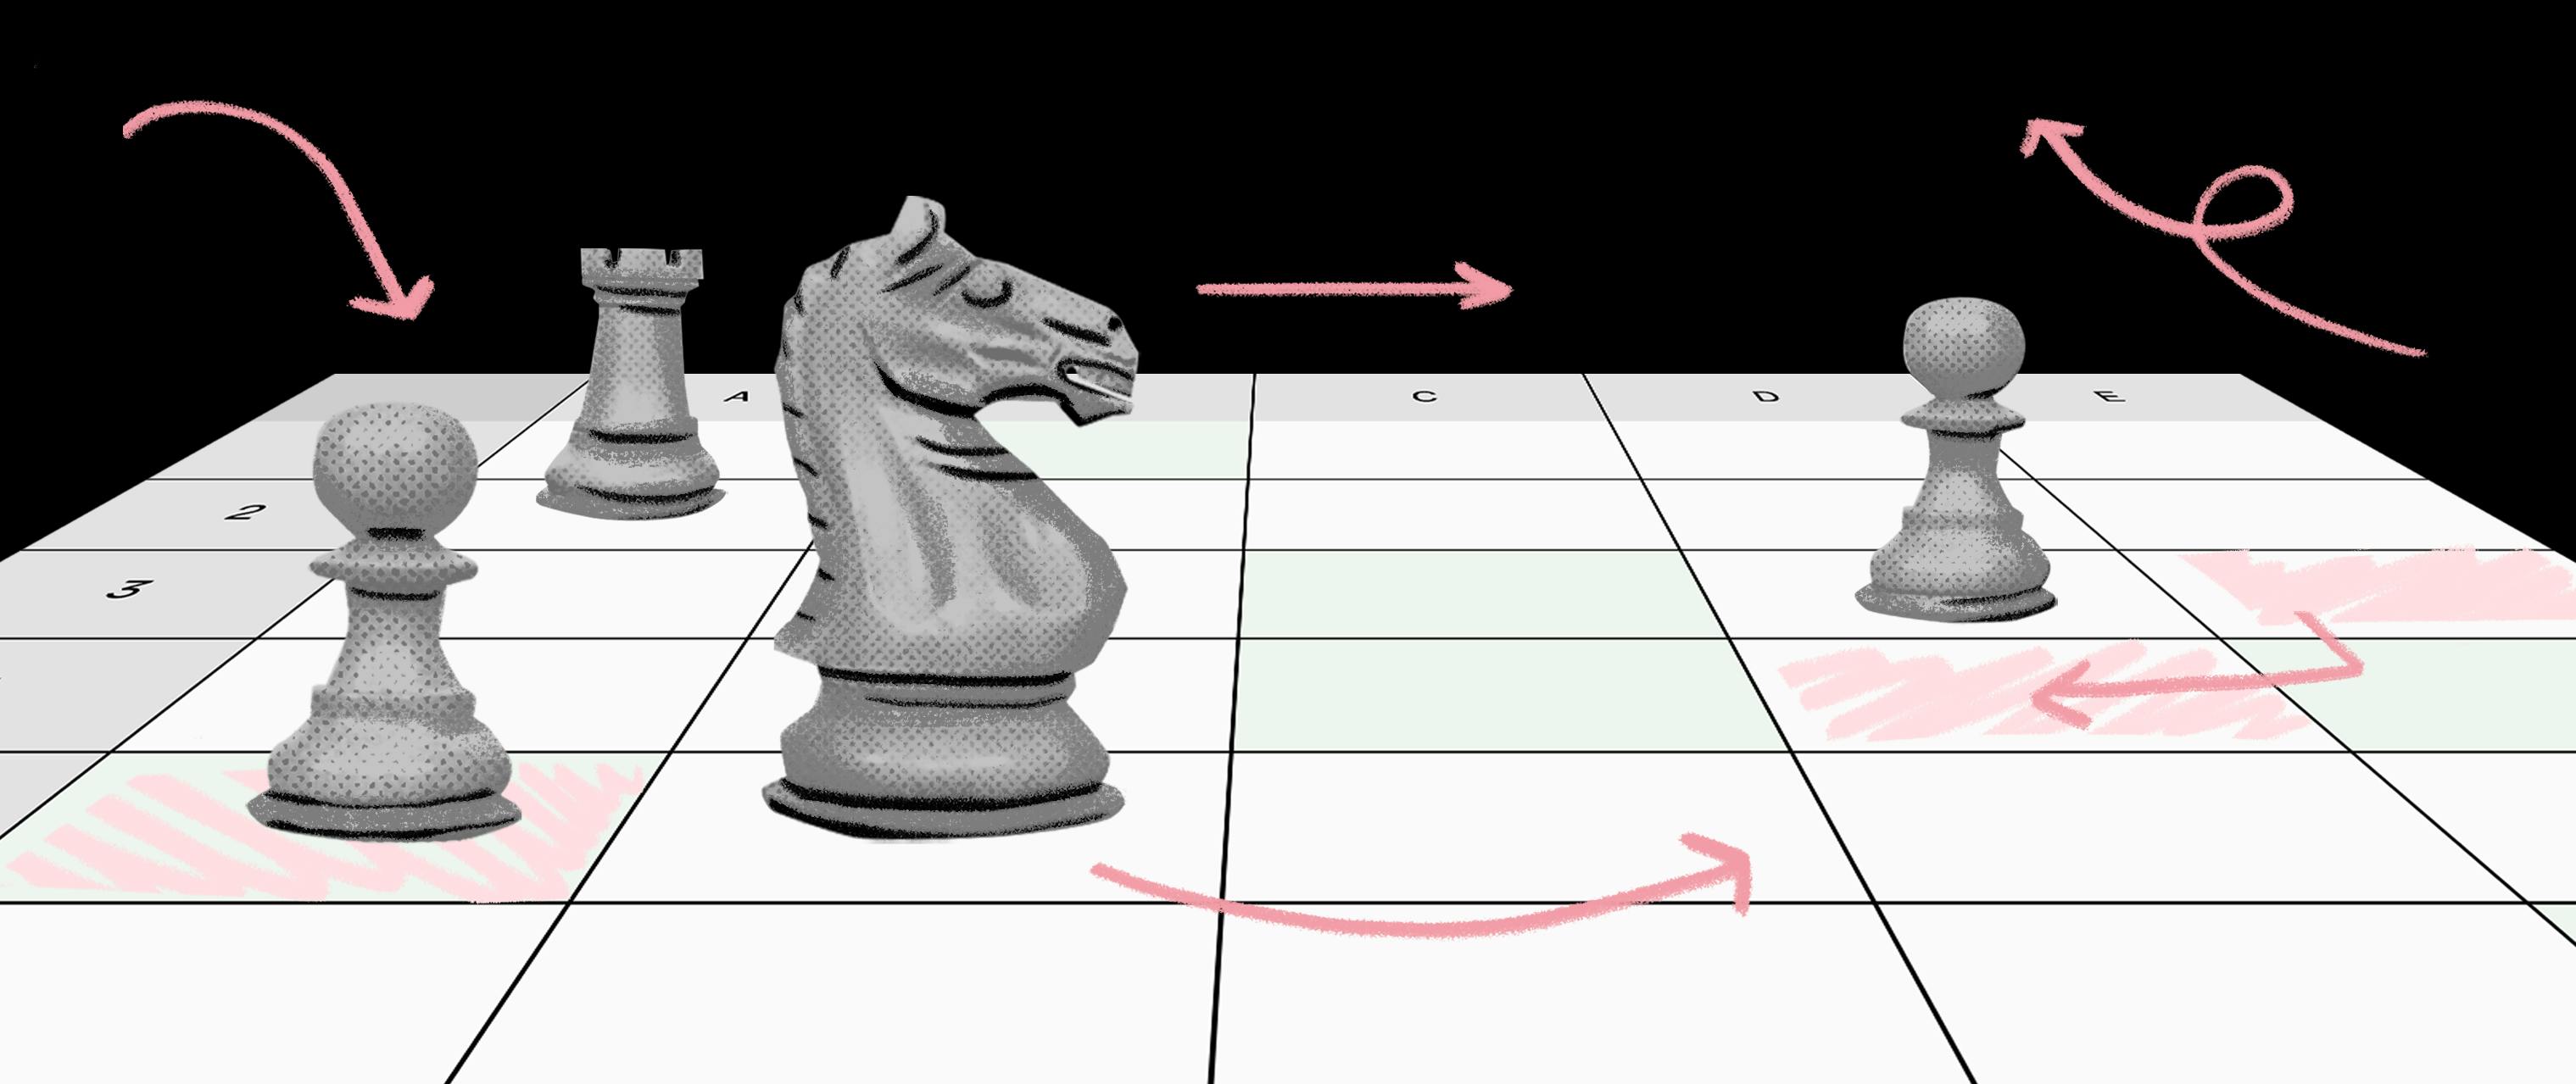 Chessfield: Strategic Financial Planning